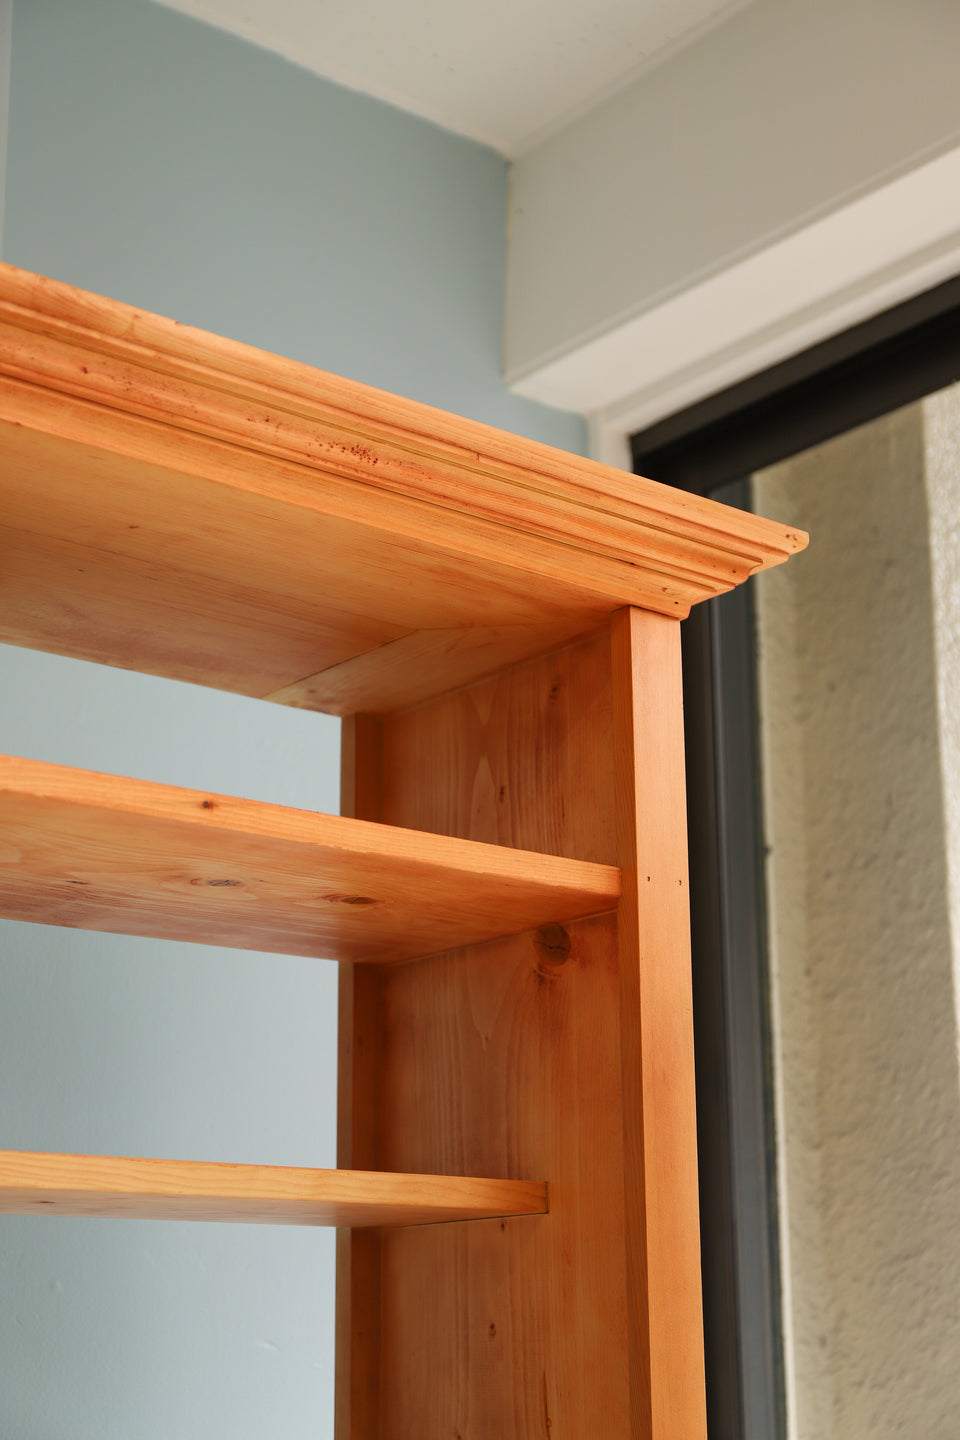 Wooden Open Display Shelf/ディスプレイオープンシェルフ 木製 シャビーナチュラル 什器